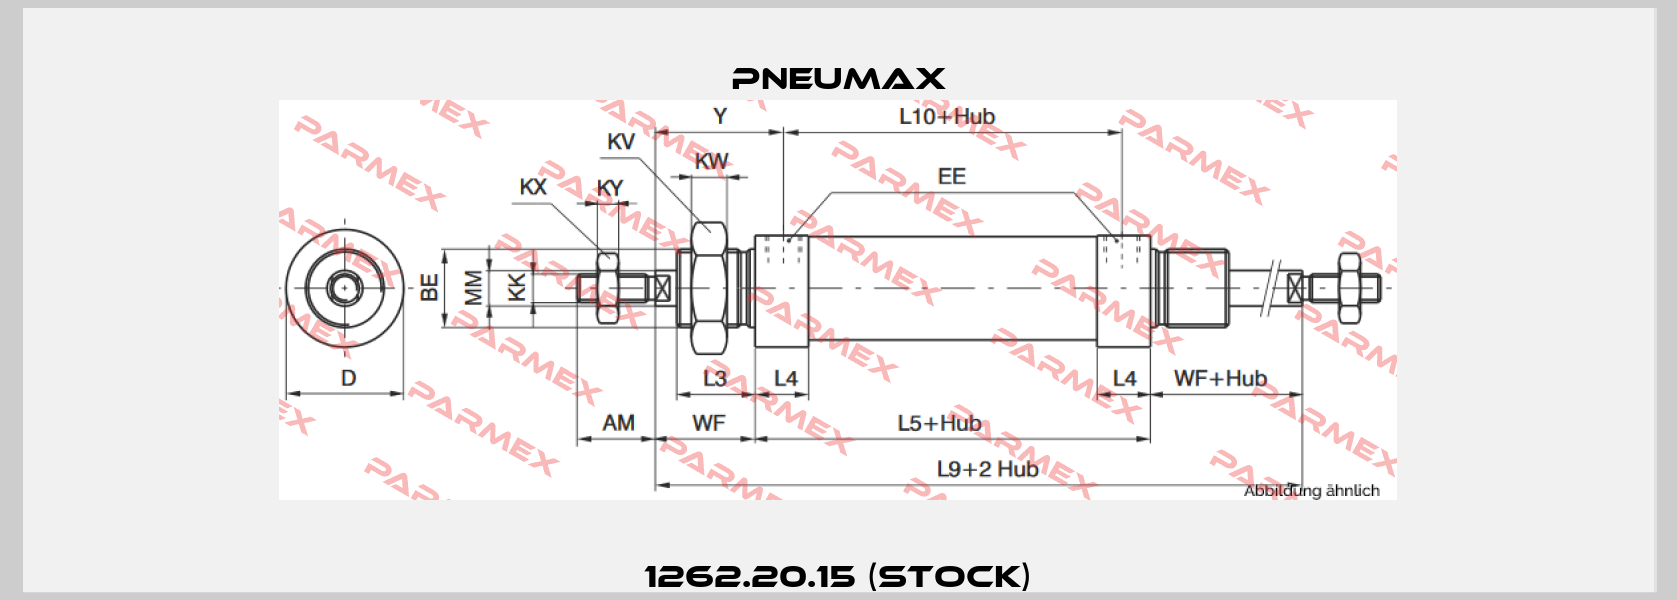 1262.20.15 (stock) Pneumax